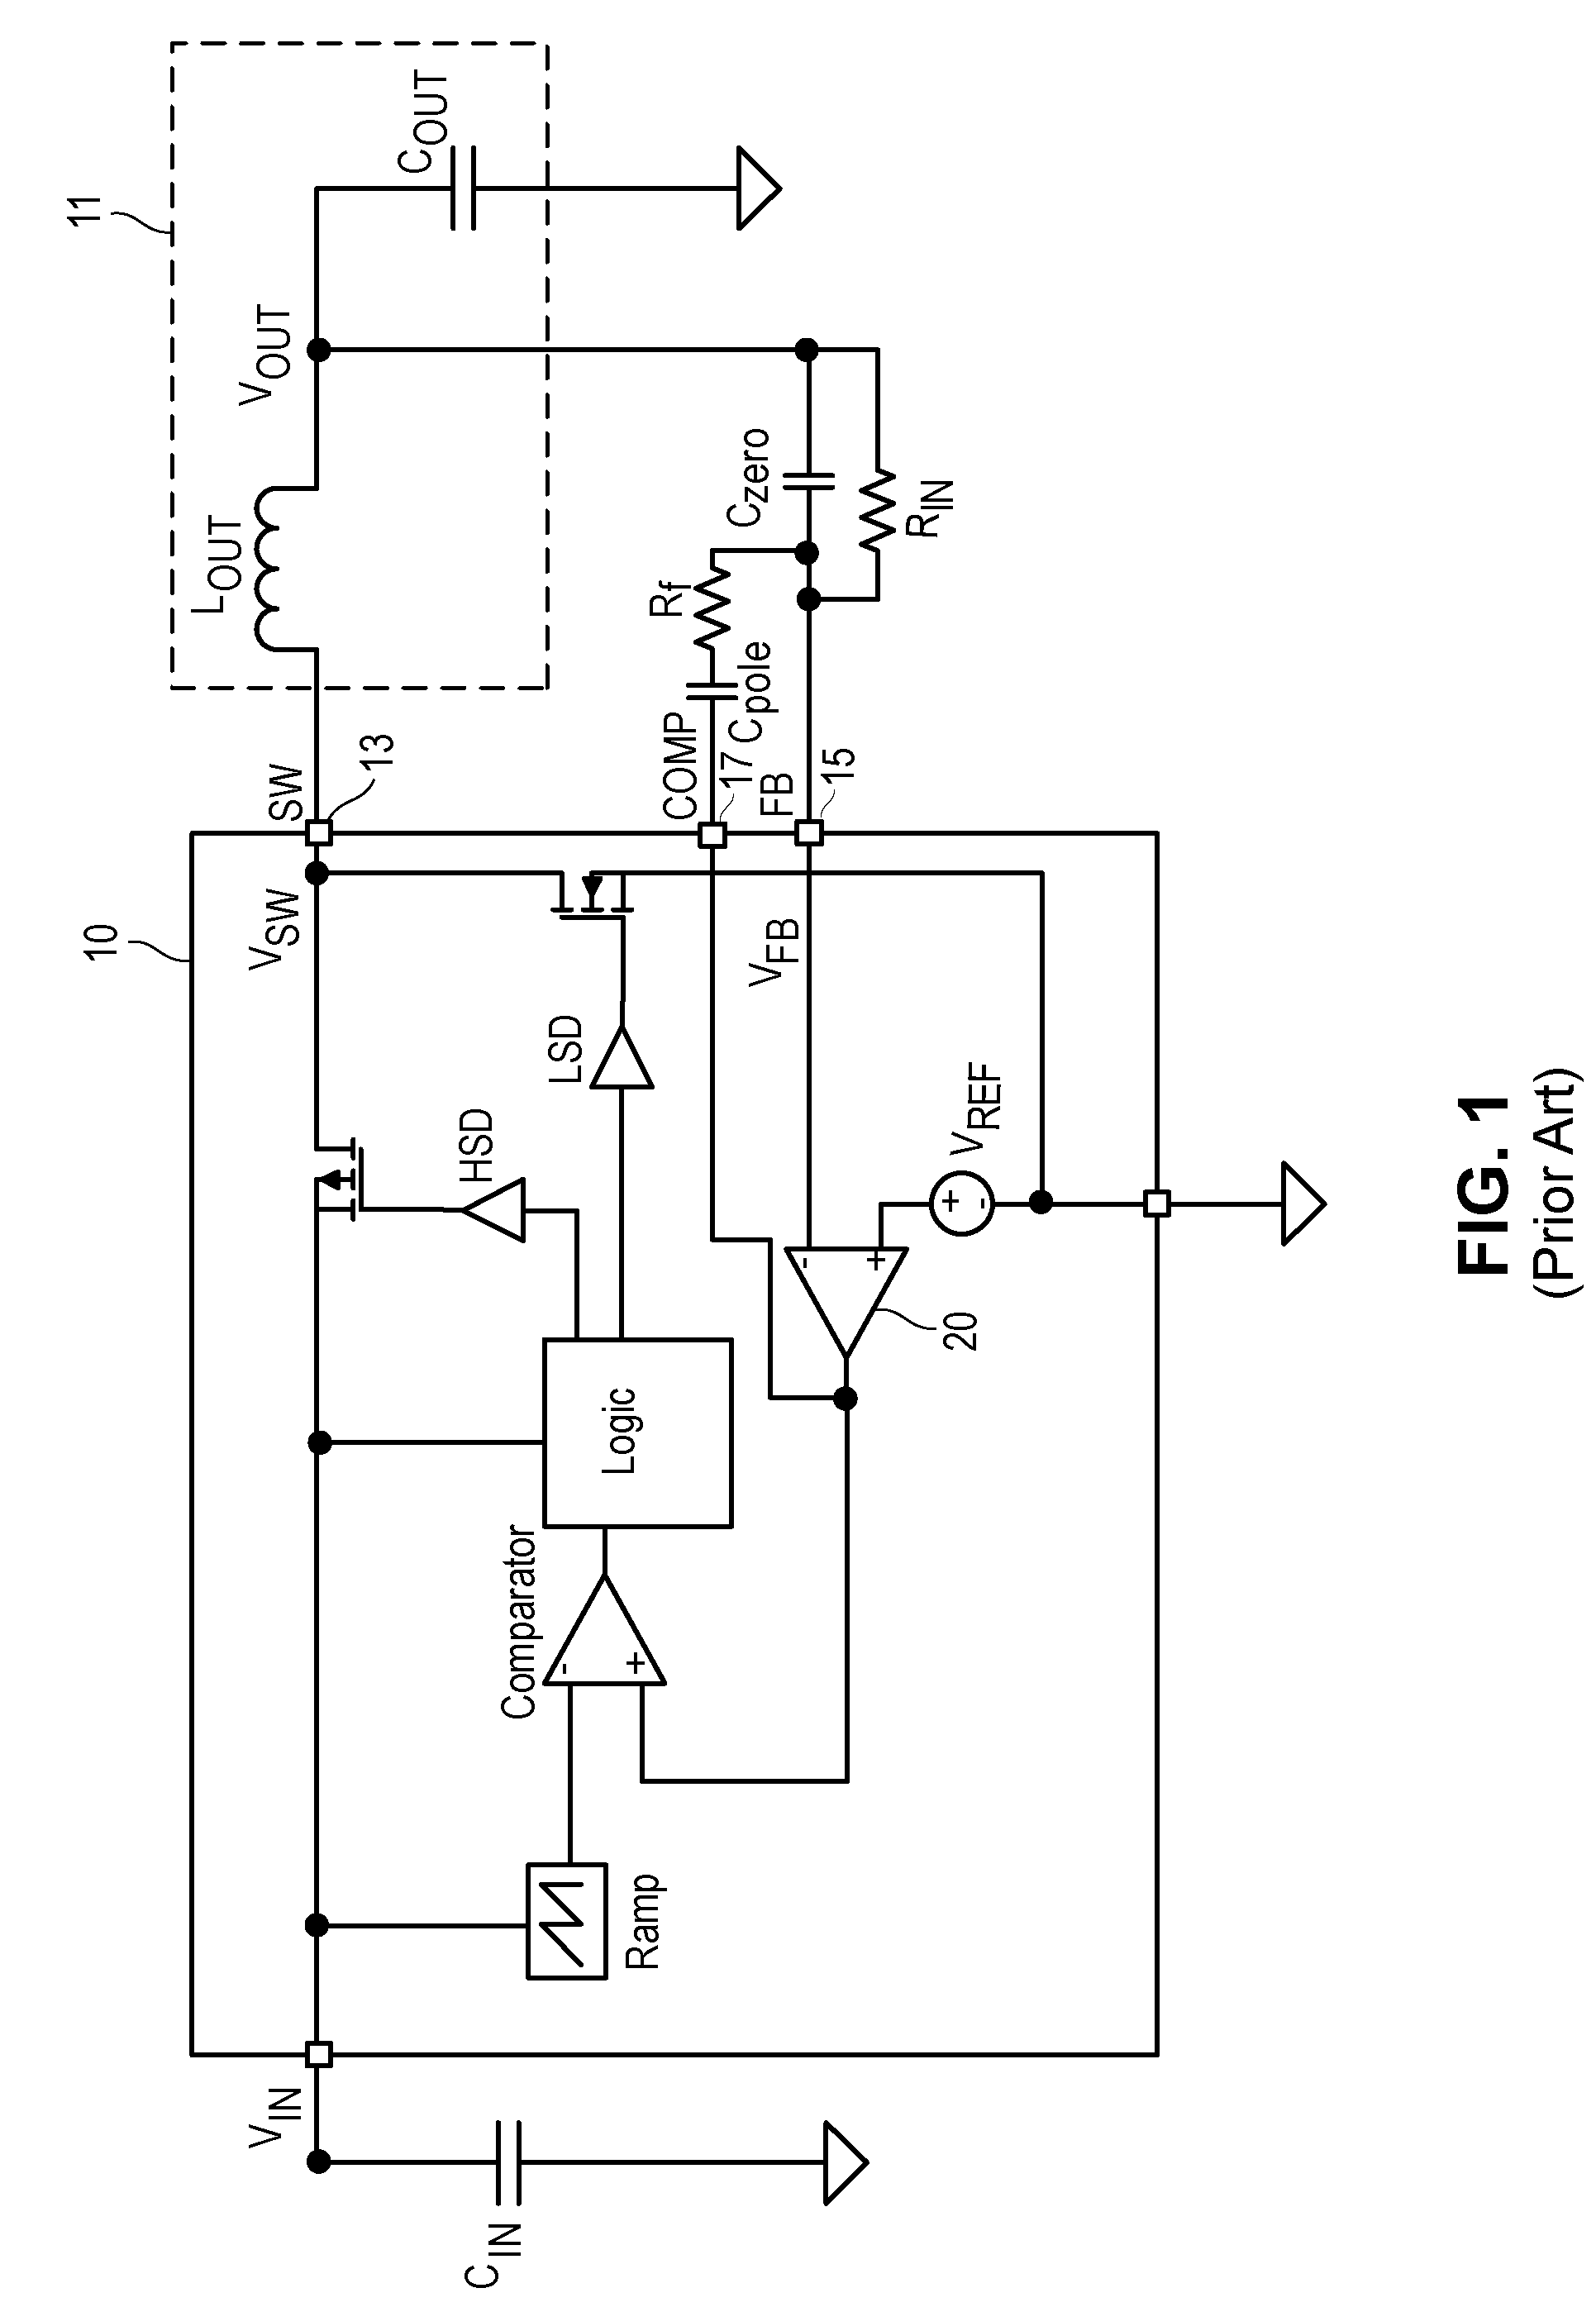 Frequency compensation scheme for a switching regulator using external zero